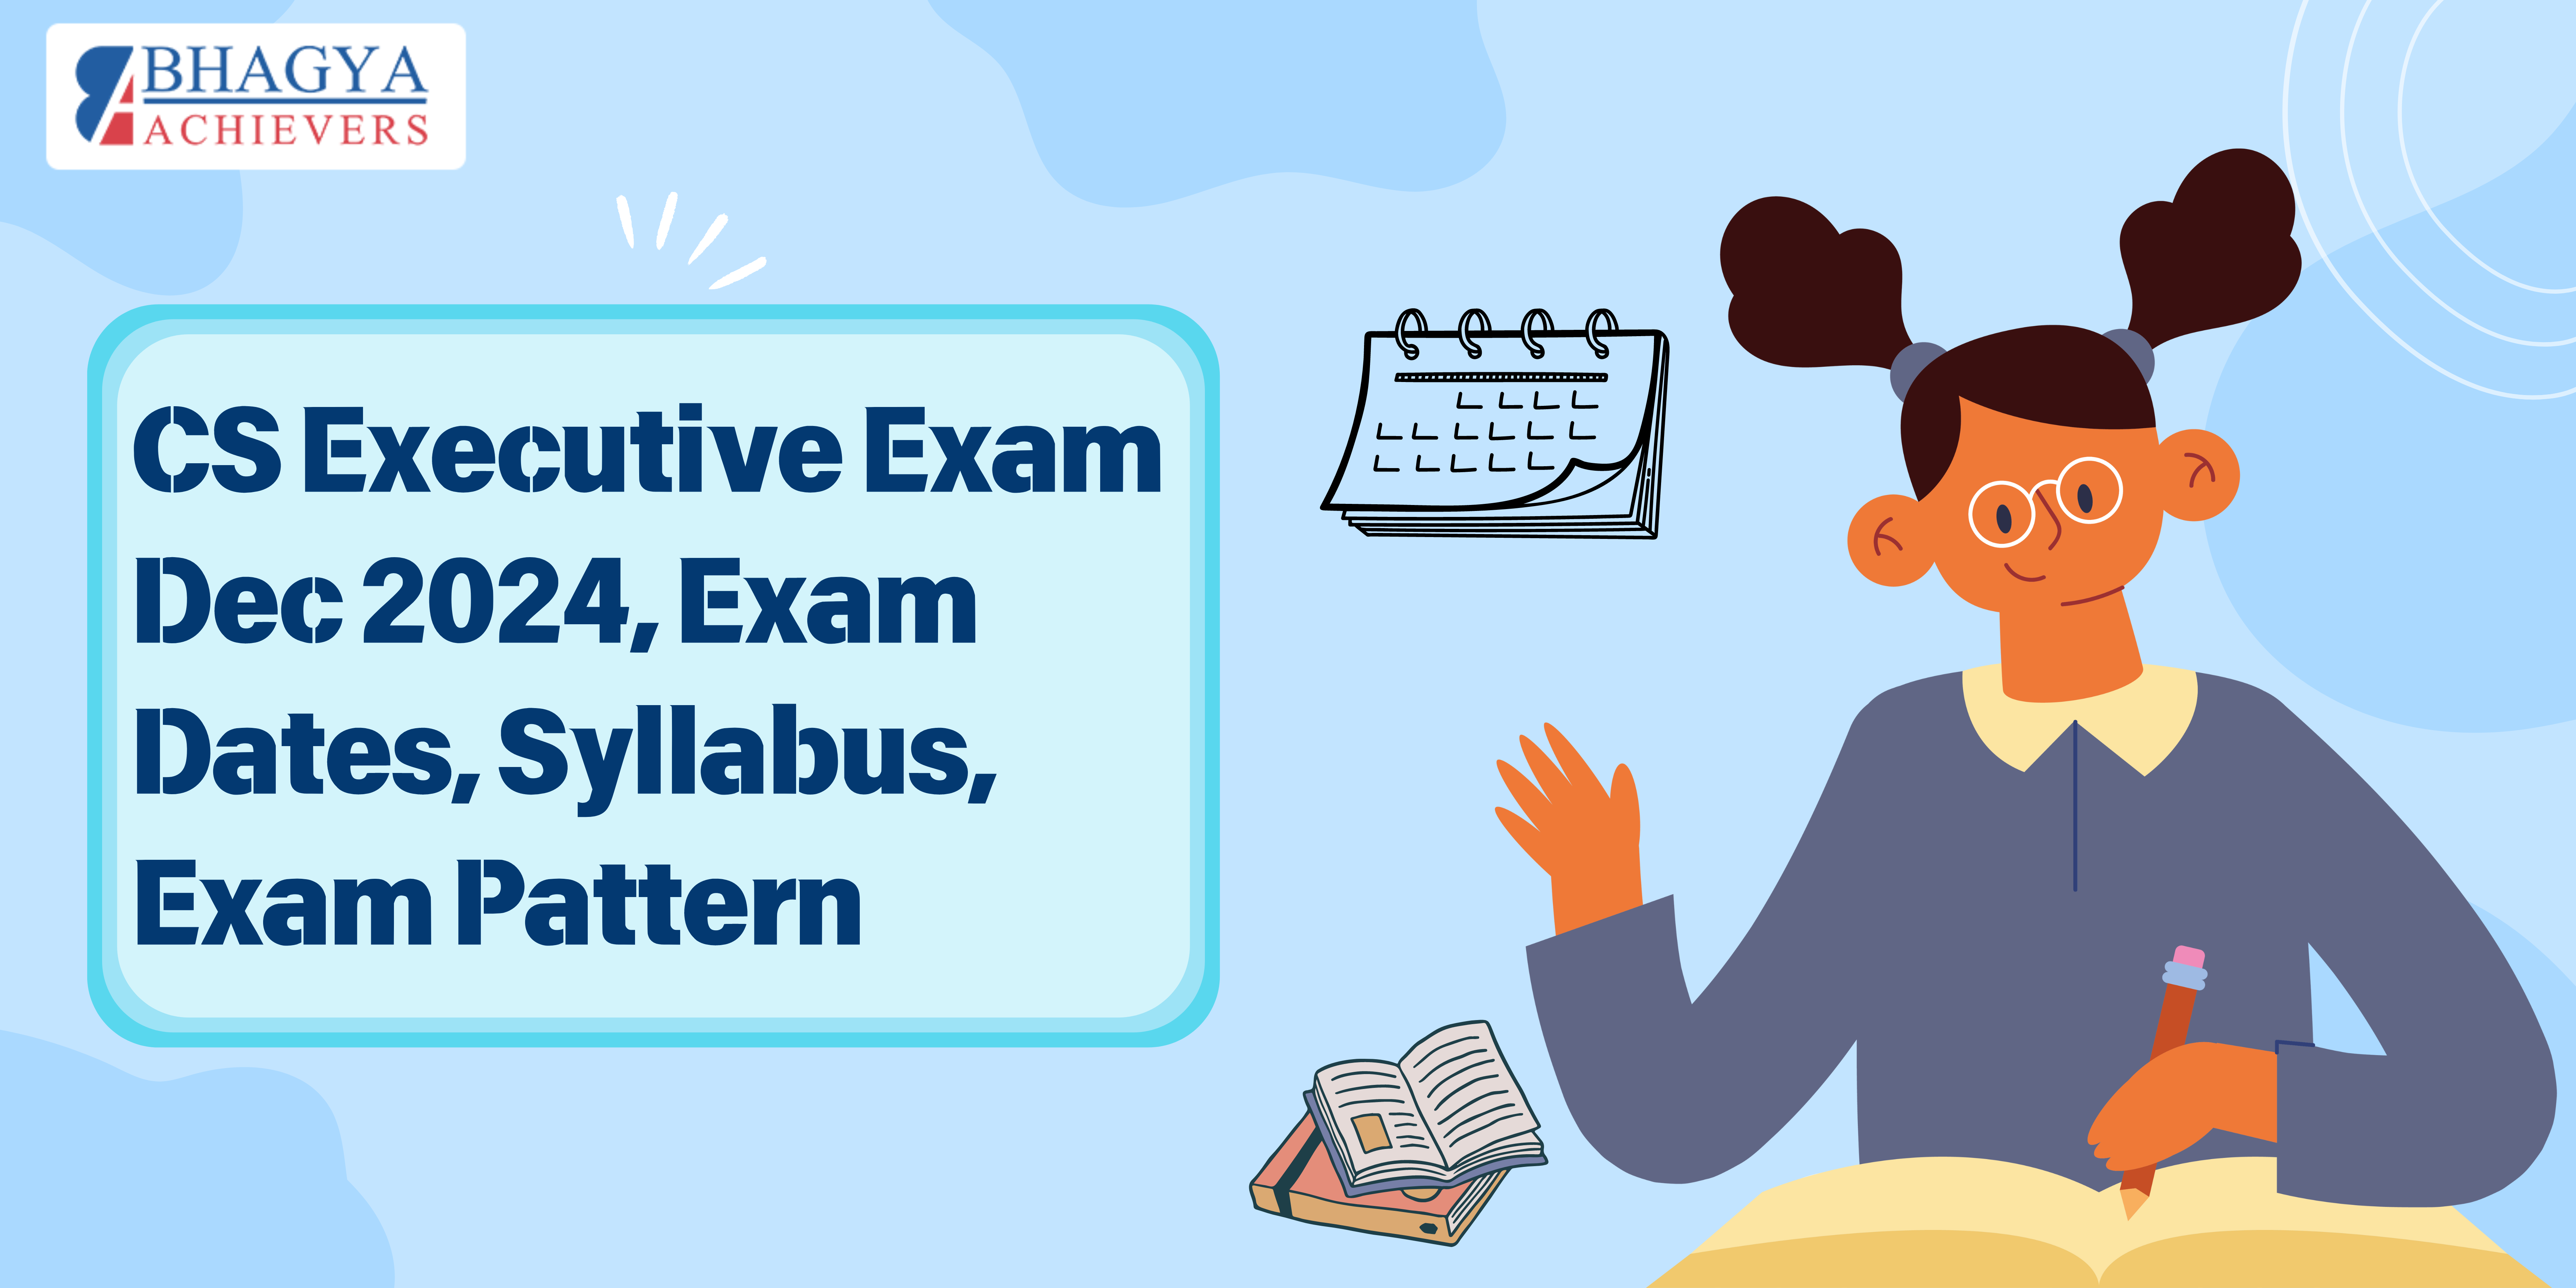 CS Executive Exam Dec 2024, Exam Dates, Syllabus, Exam Pattern - Bhagya Achievers